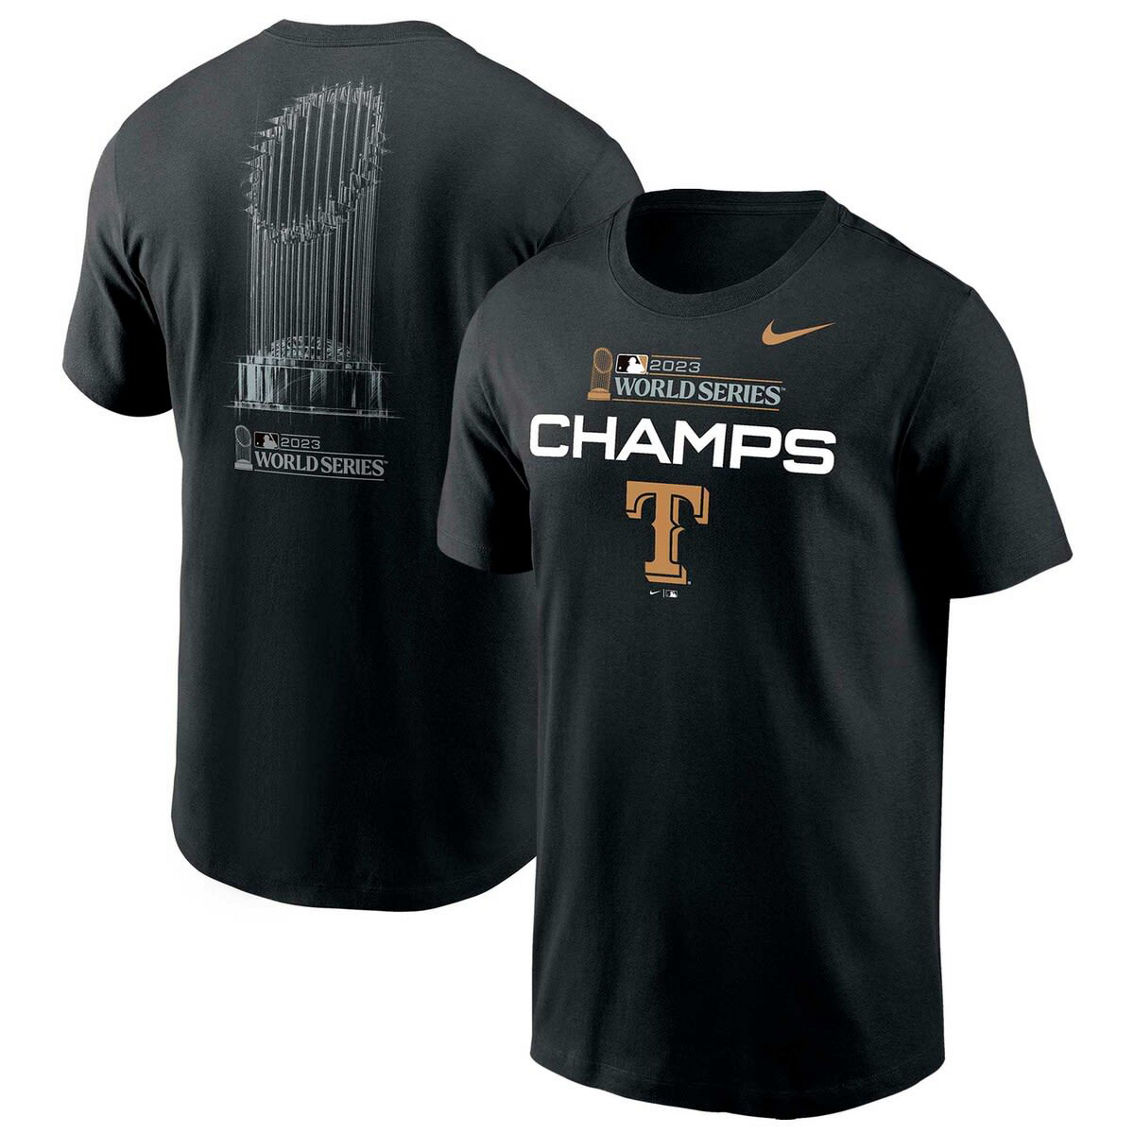 Men's Nike Black Texas Rangers 2023 World Series Champions Trophy T-Shirt - Image 2 of 4